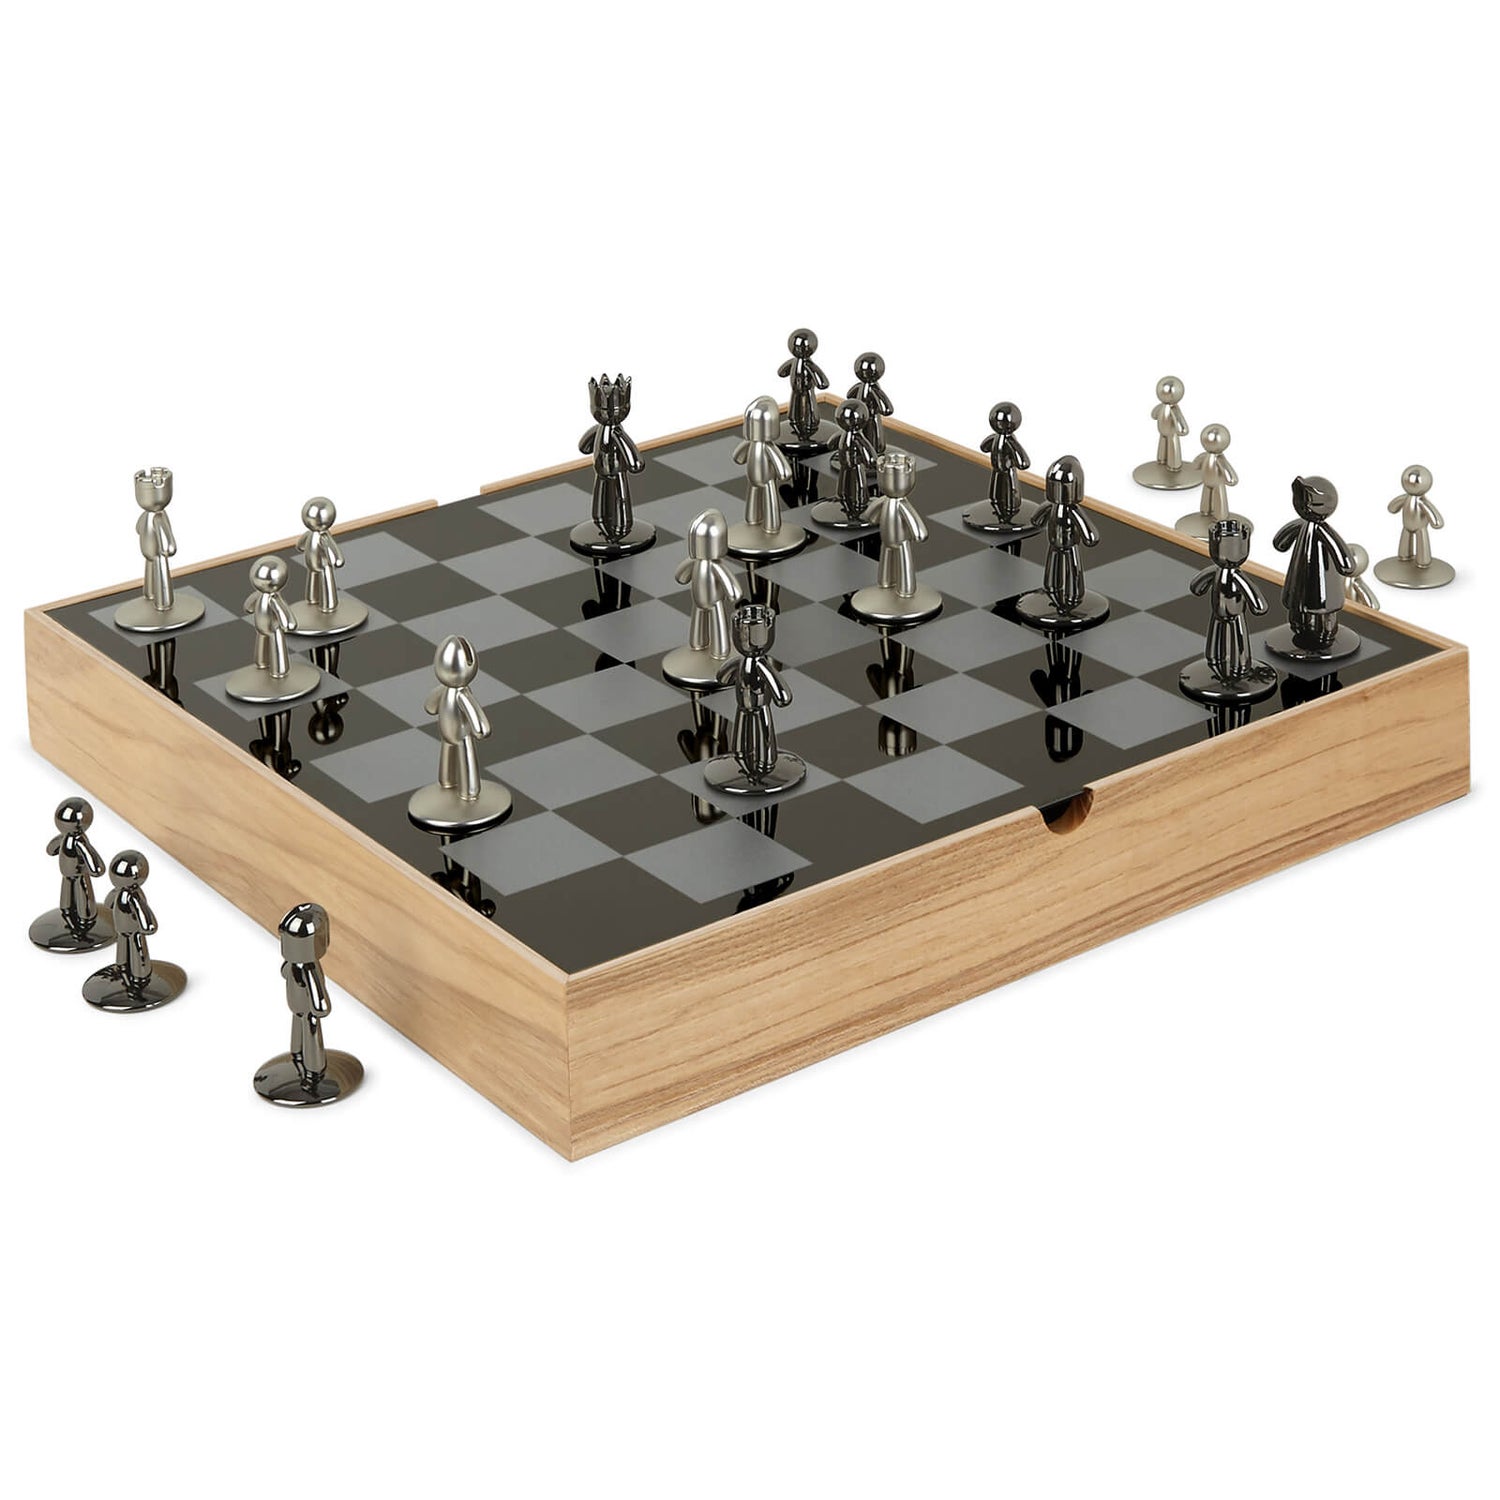 Umbra Buddy Chess Set - Natural